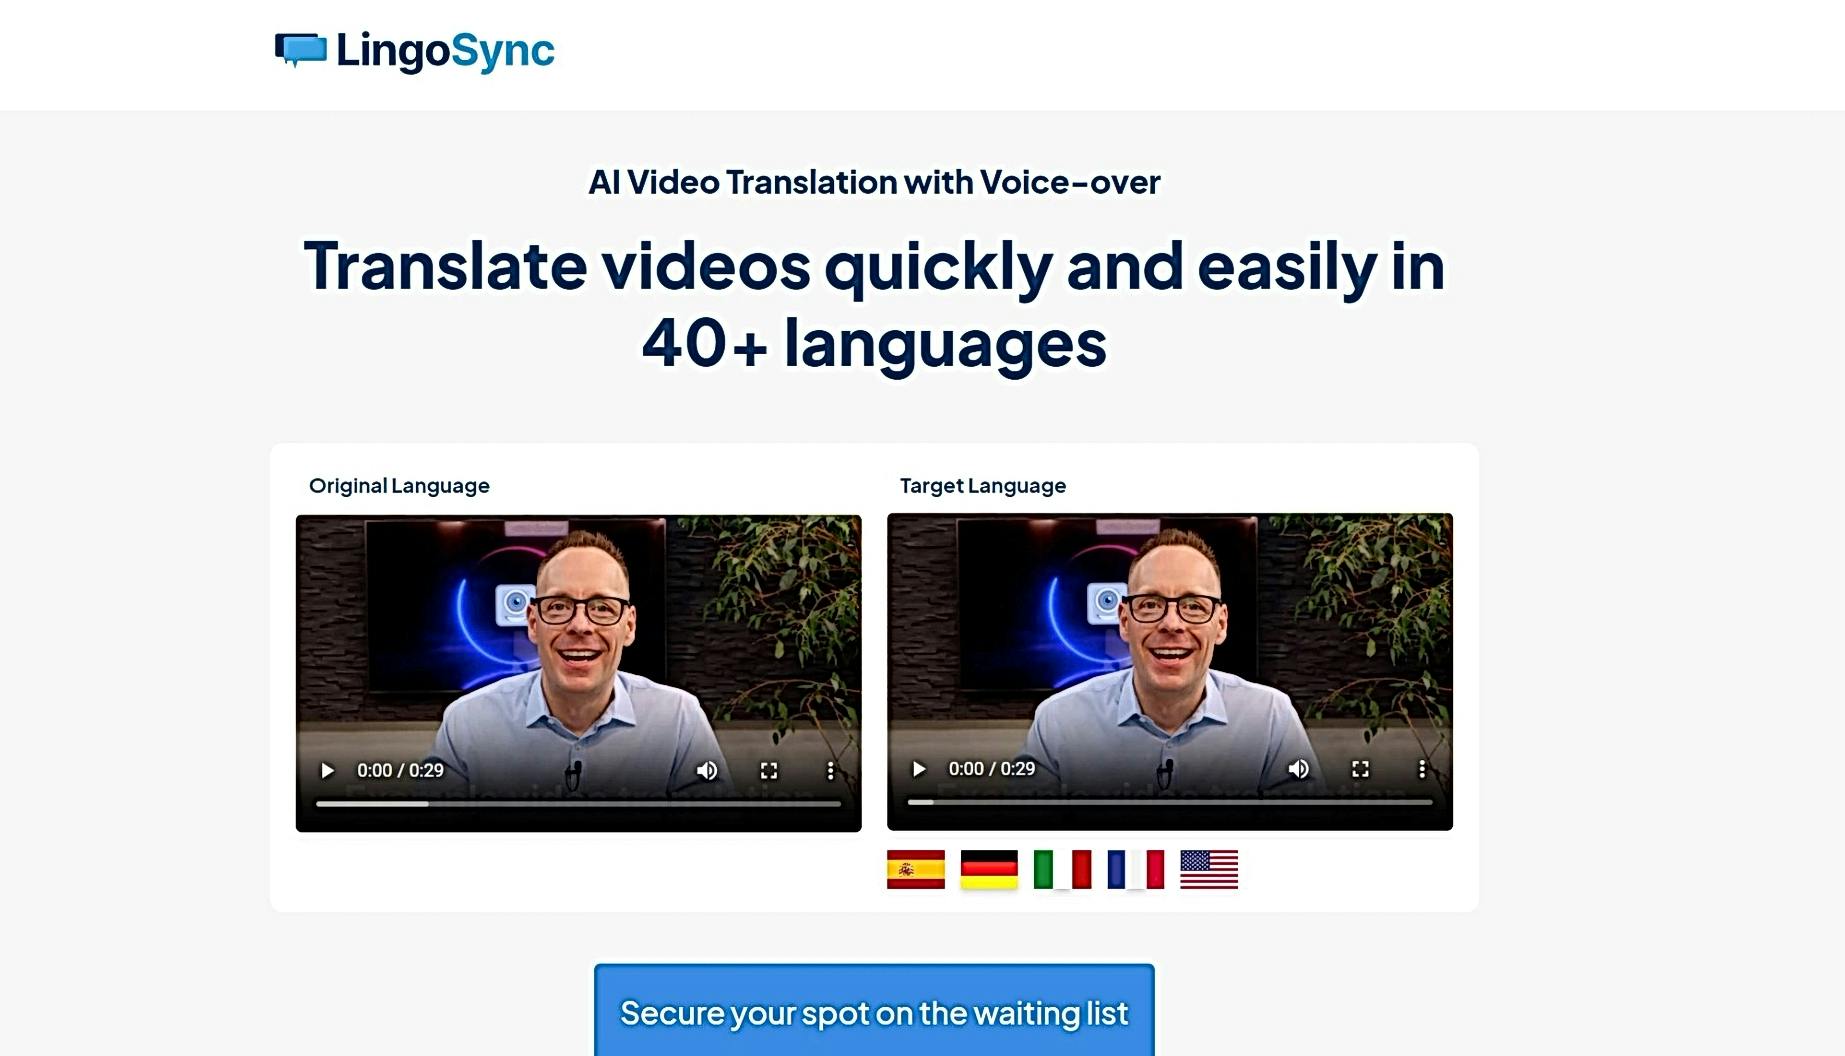 Lingosync featured